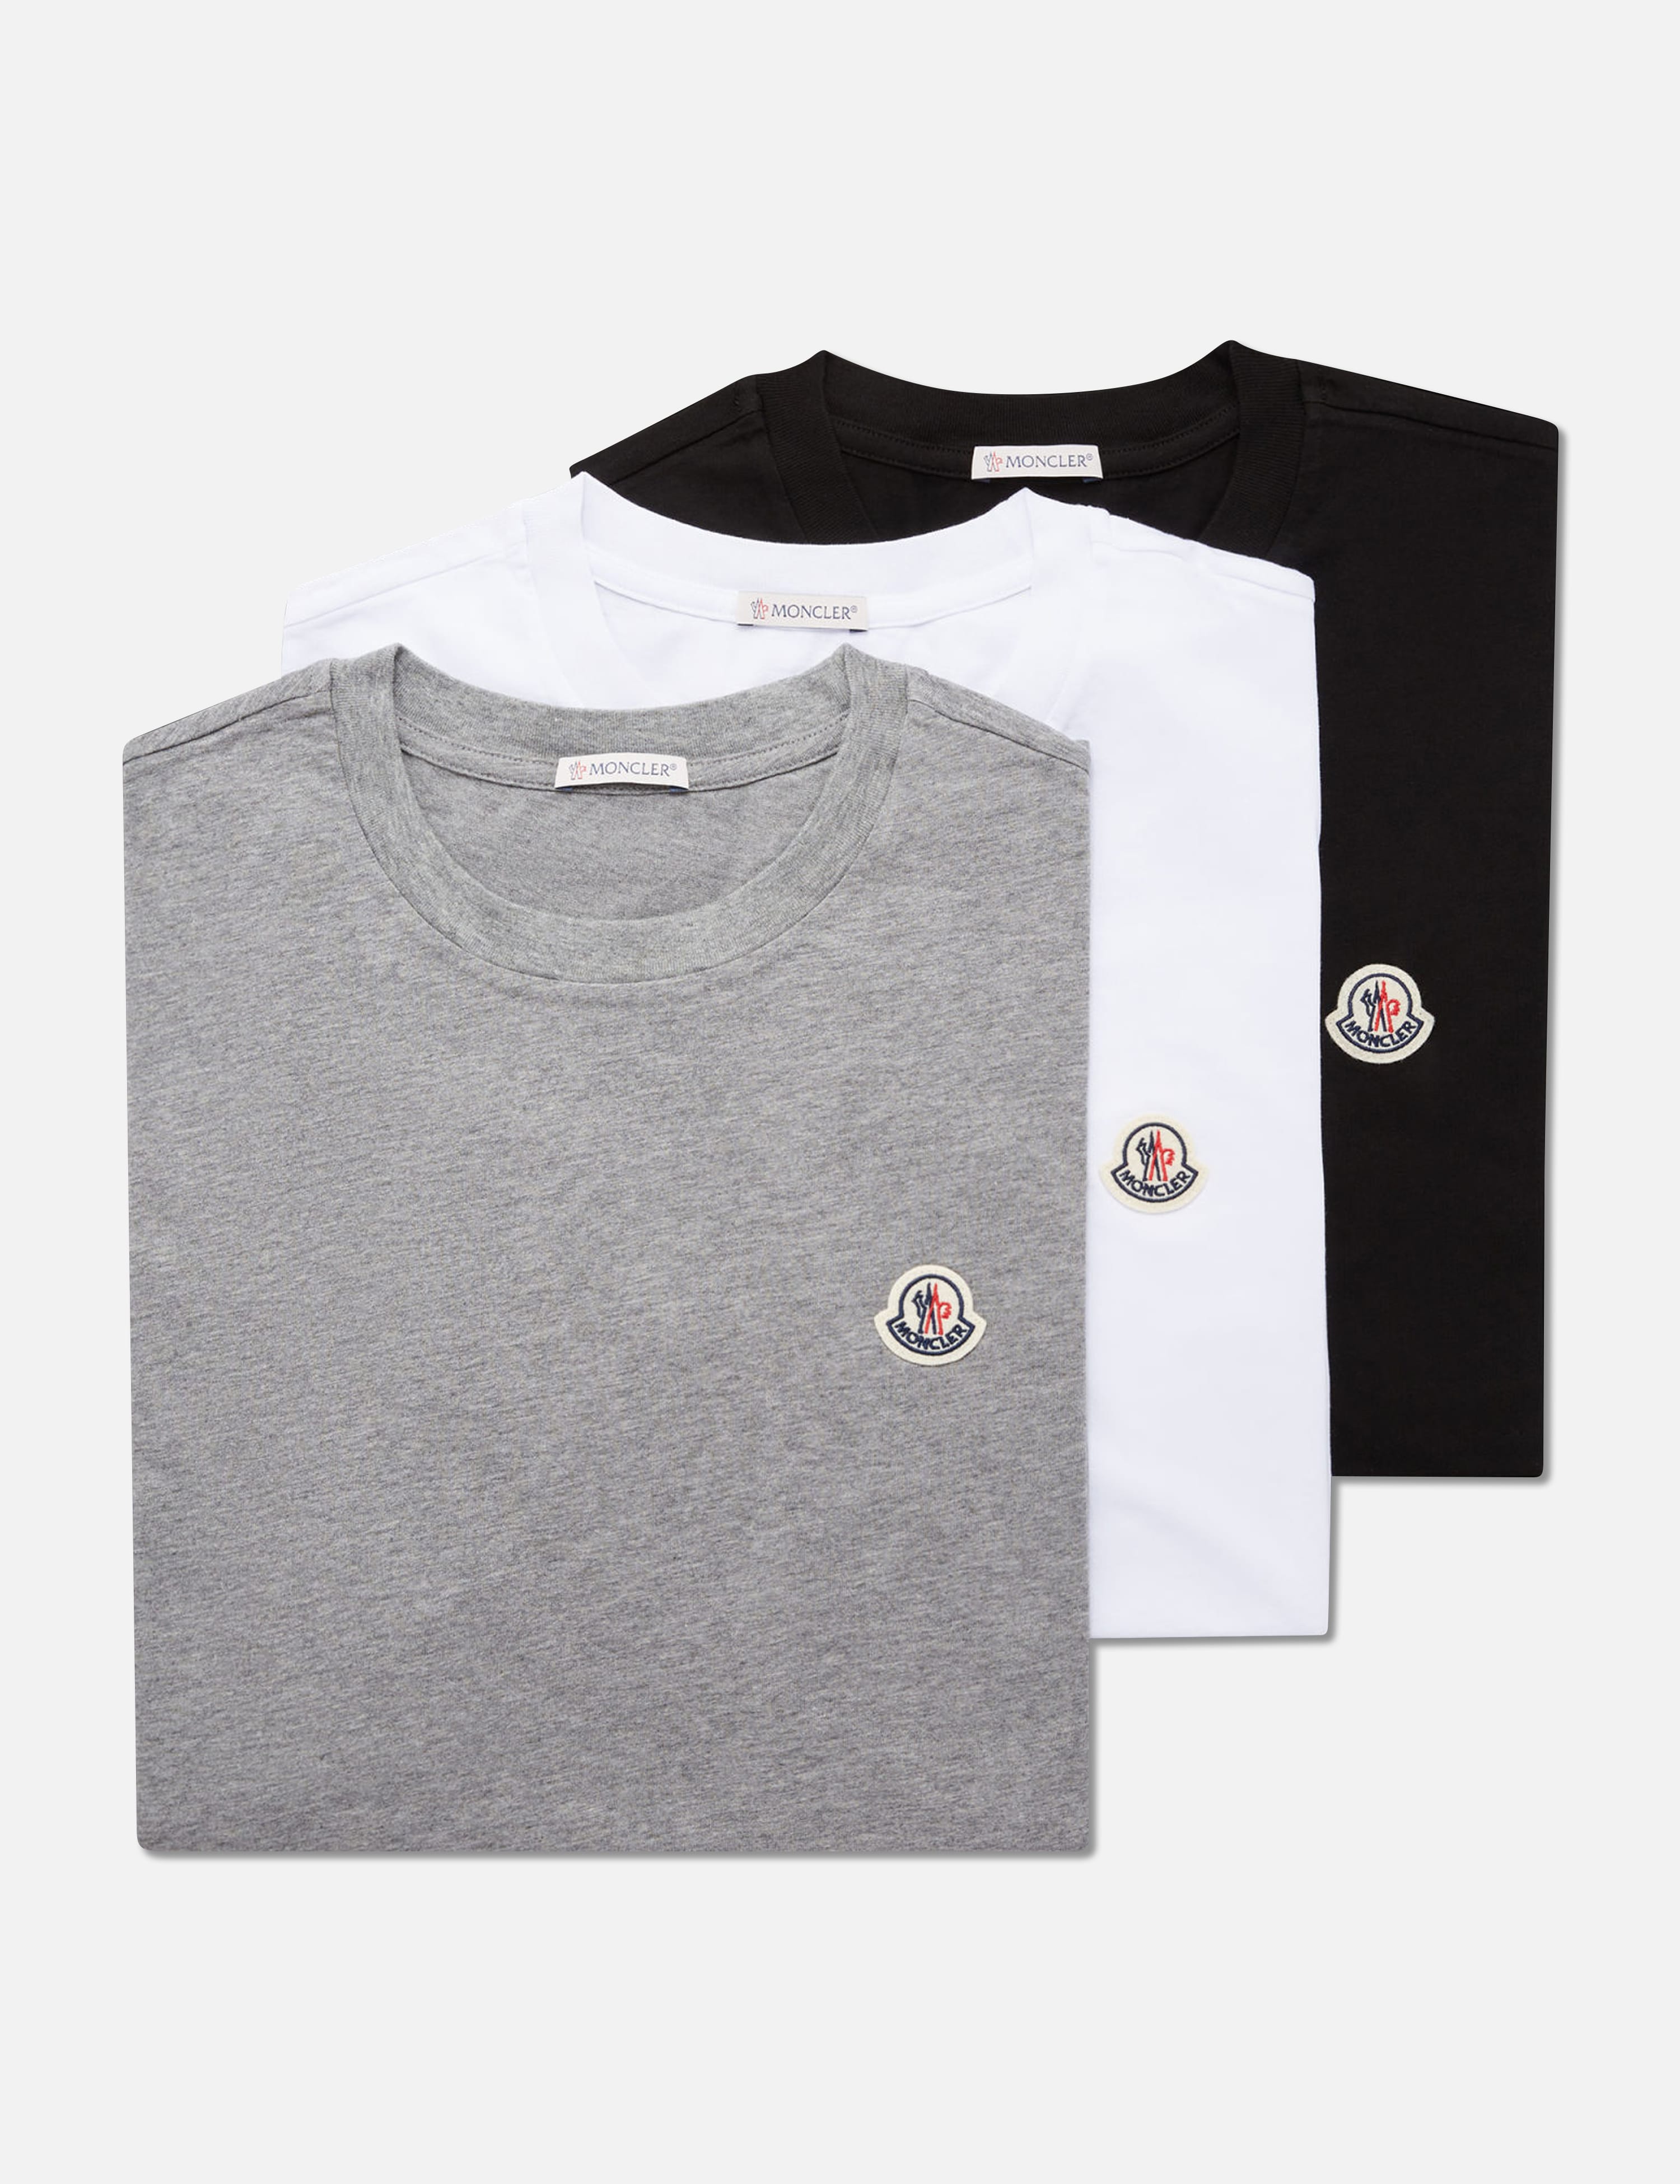 Moncler - Moncler Logo T-Shirts (Pack of 3) | HBX - Globally